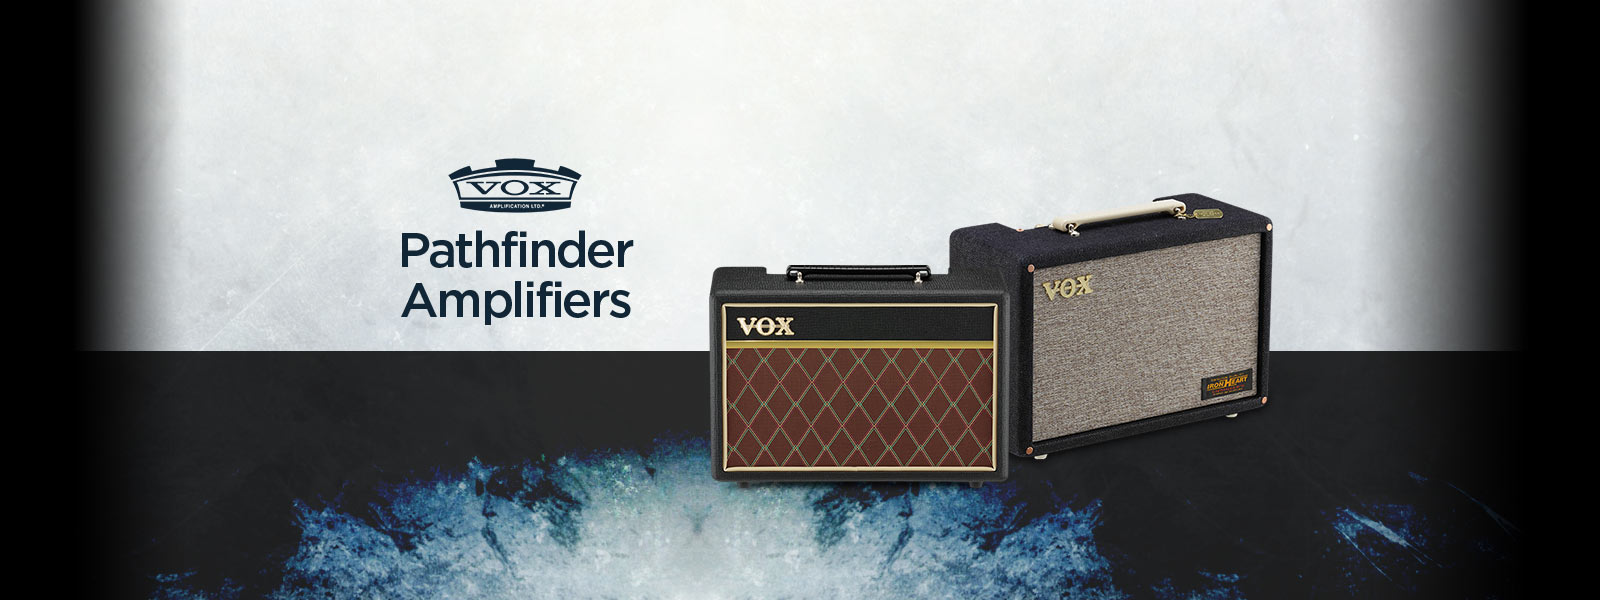 VOX Pathfinder Series Amplifiers